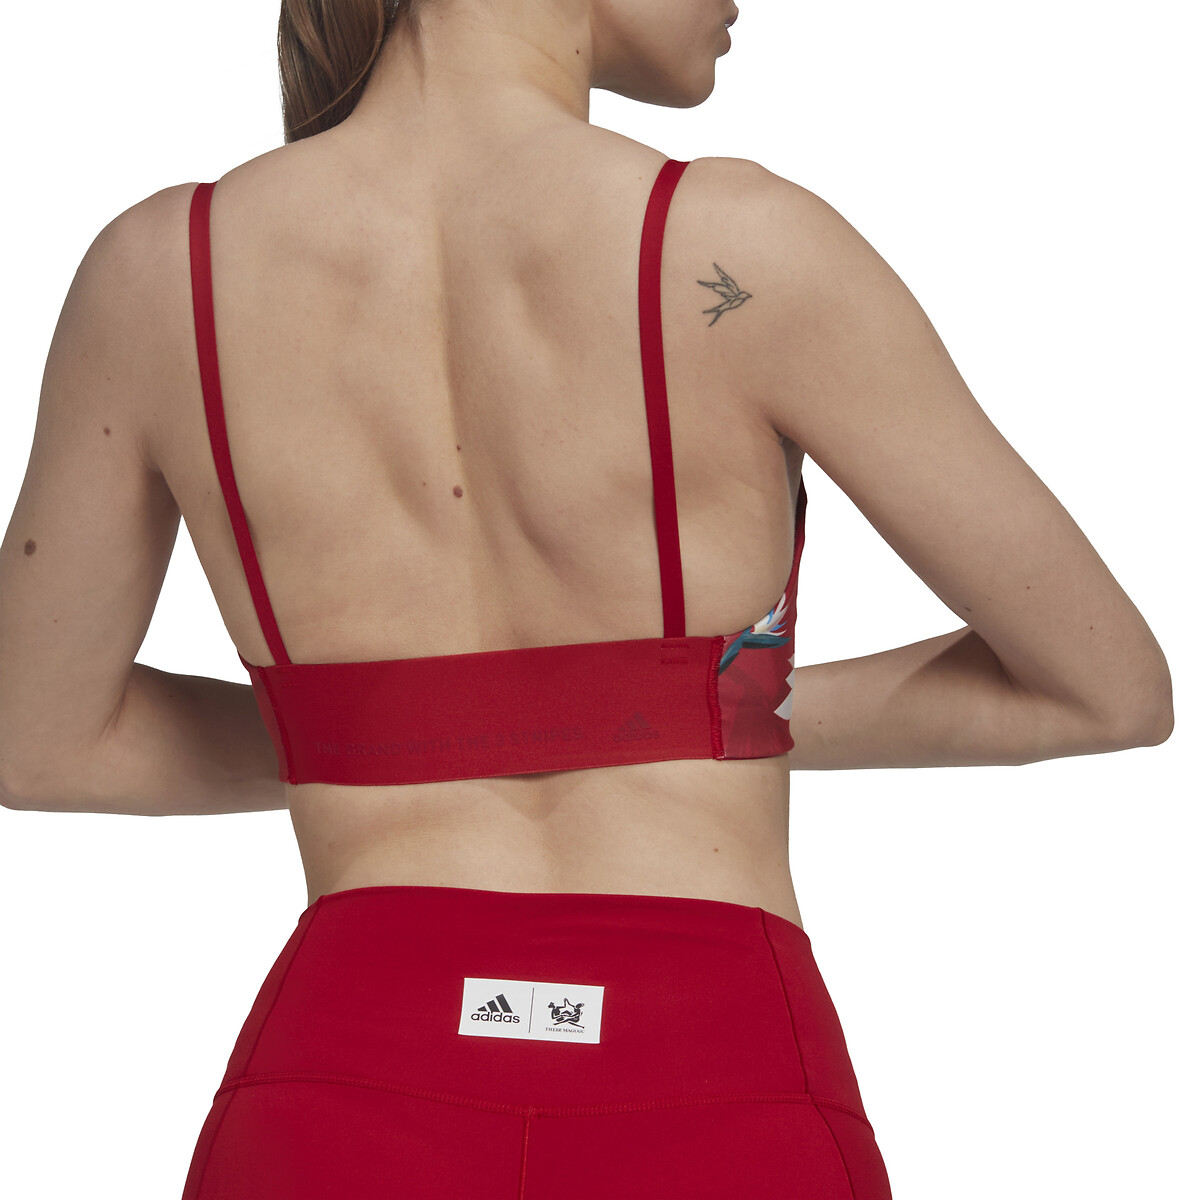 Printed sports bra, red, Adidas Performance